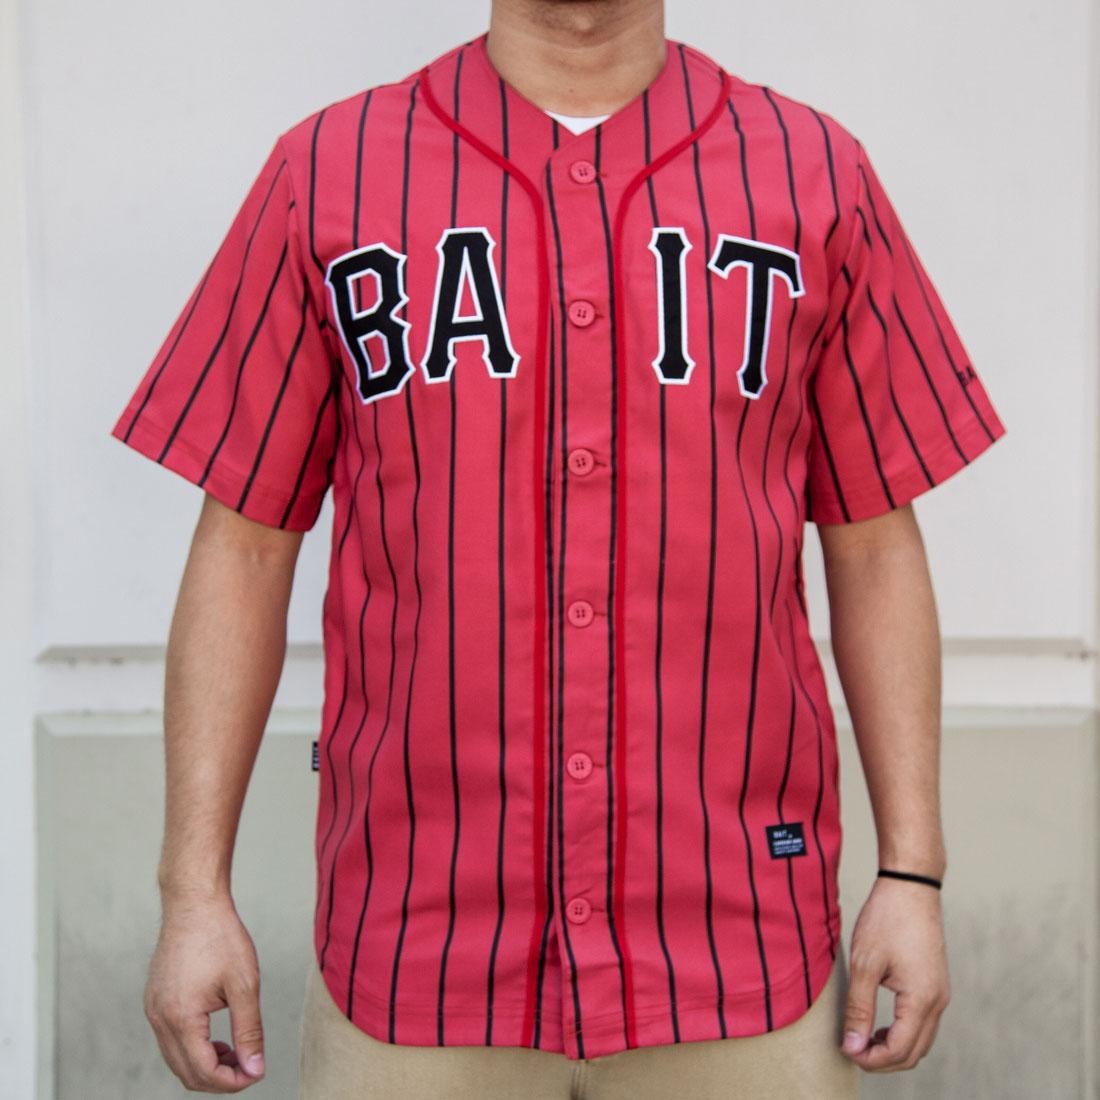 red pinstripe baseball jersey